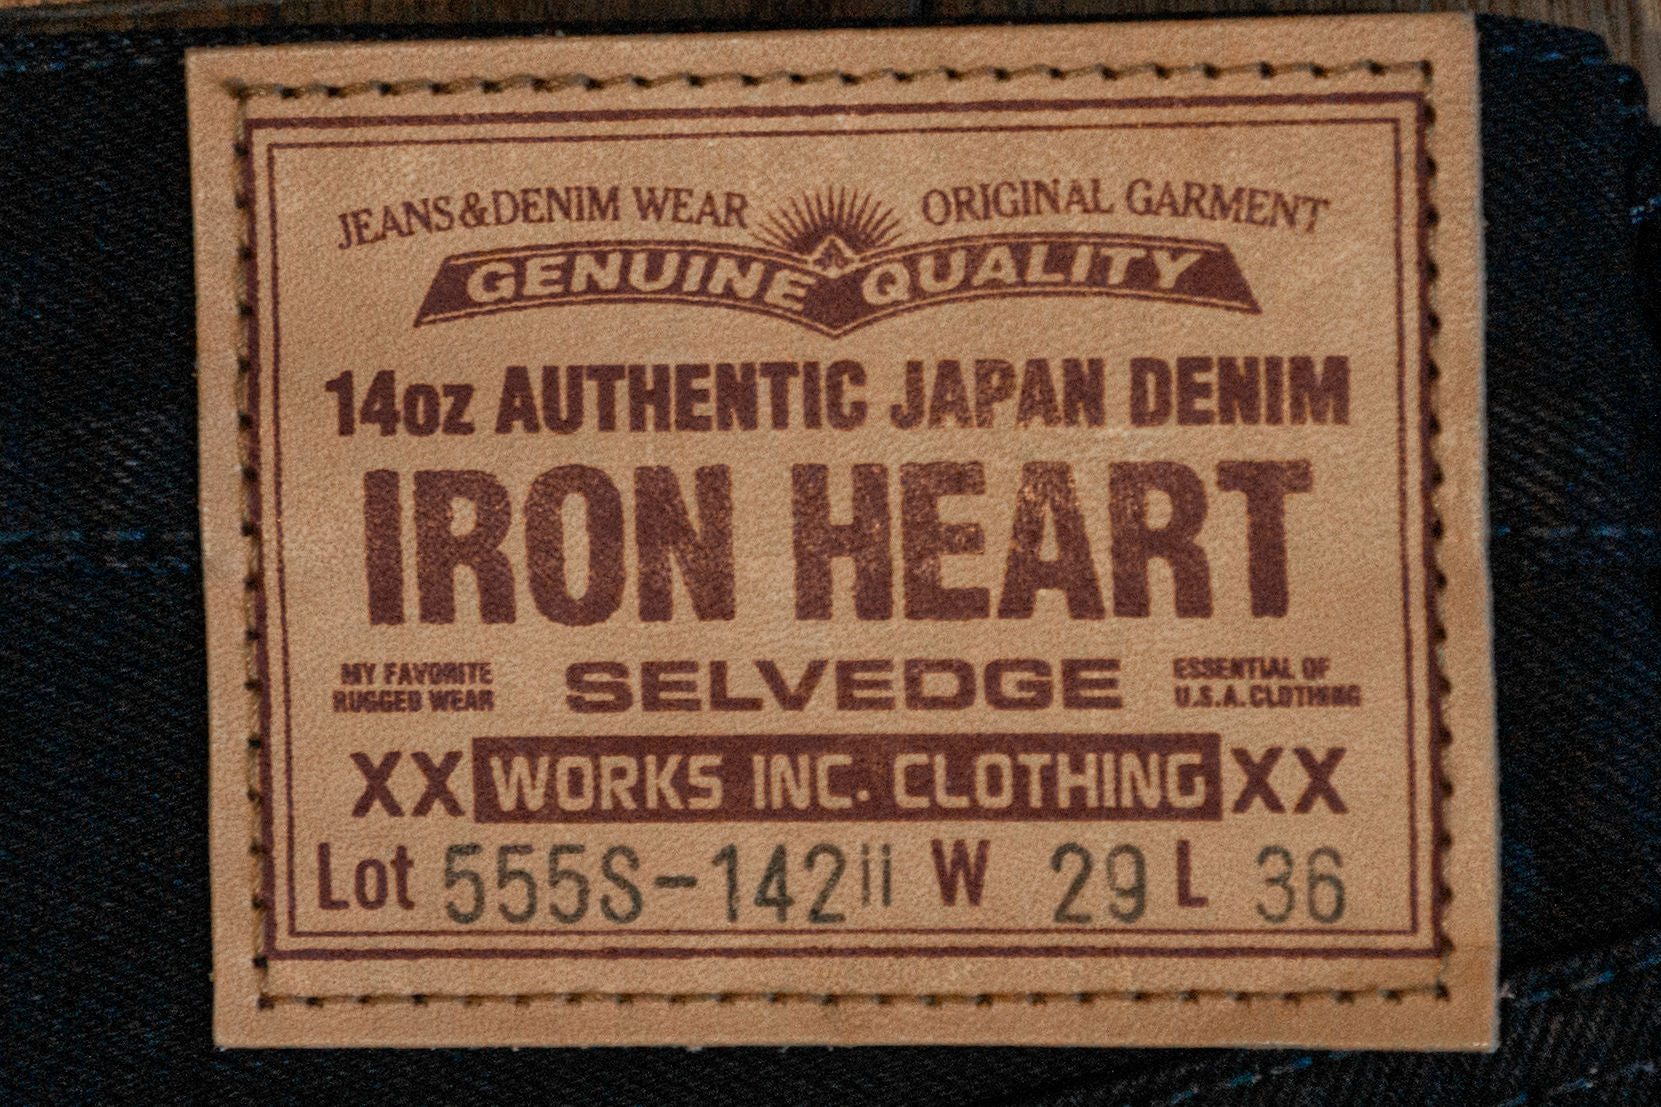 Iron Heart IH-555S-142ii 14oz Selvedge Denim Super Slim Cut Jeans - Indigo/Indigo